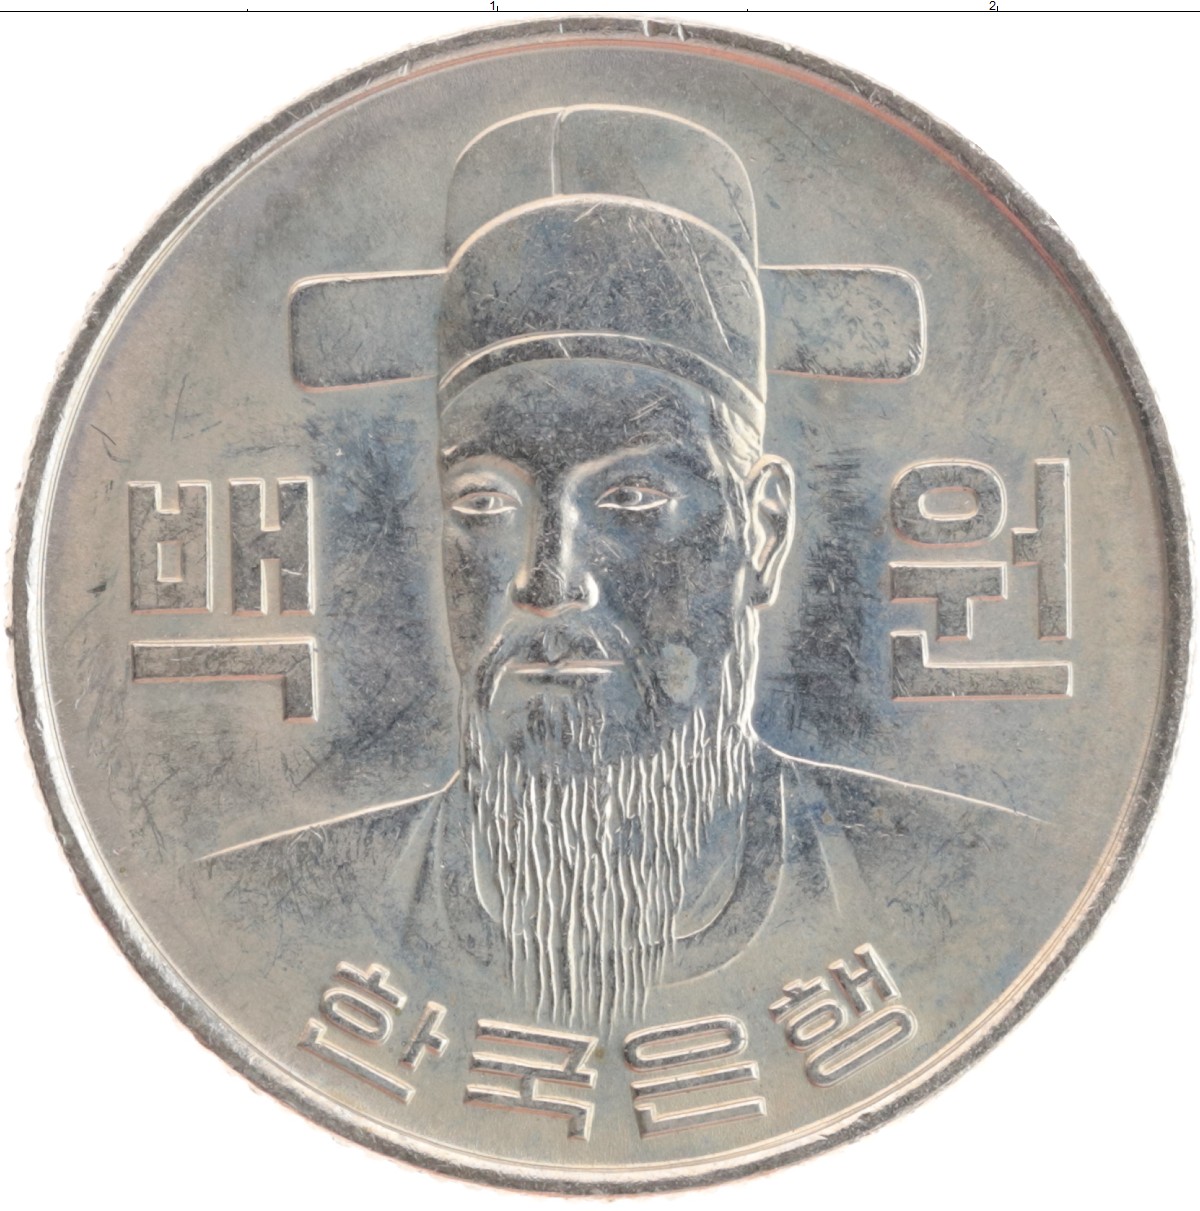 100 вон это сколько. Монета 100 вон Южная Корея 2005г. Монета Южной Кореи 100 вон. Монета 100 вон Южной Кореи 1991г. Ли Сунсин 100 вон.